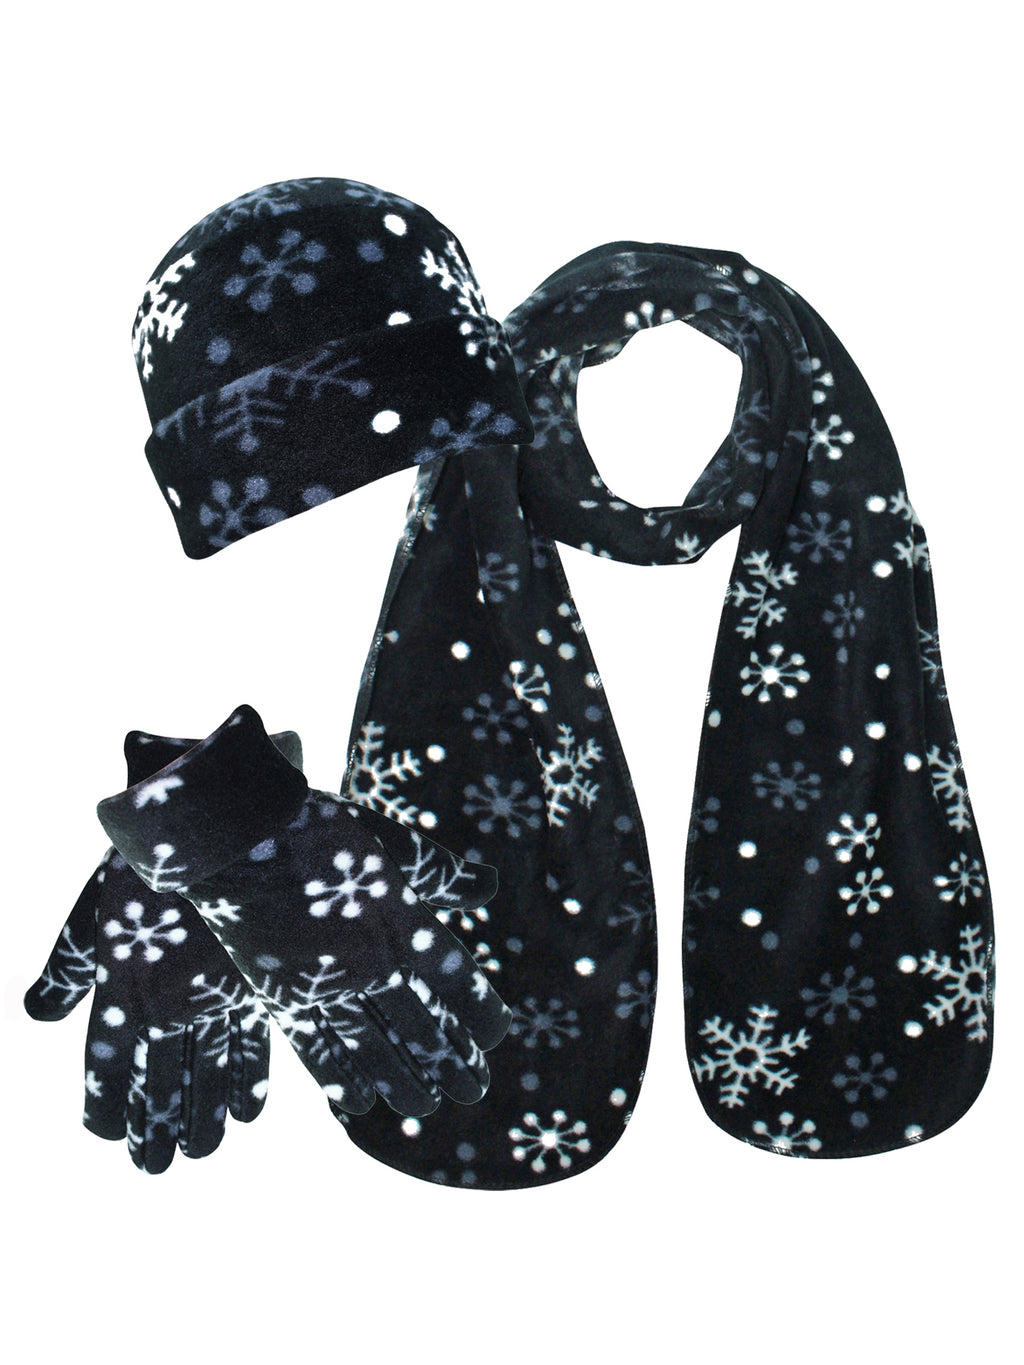 Black & White Snowflake Hat Scarf & Gloves Set